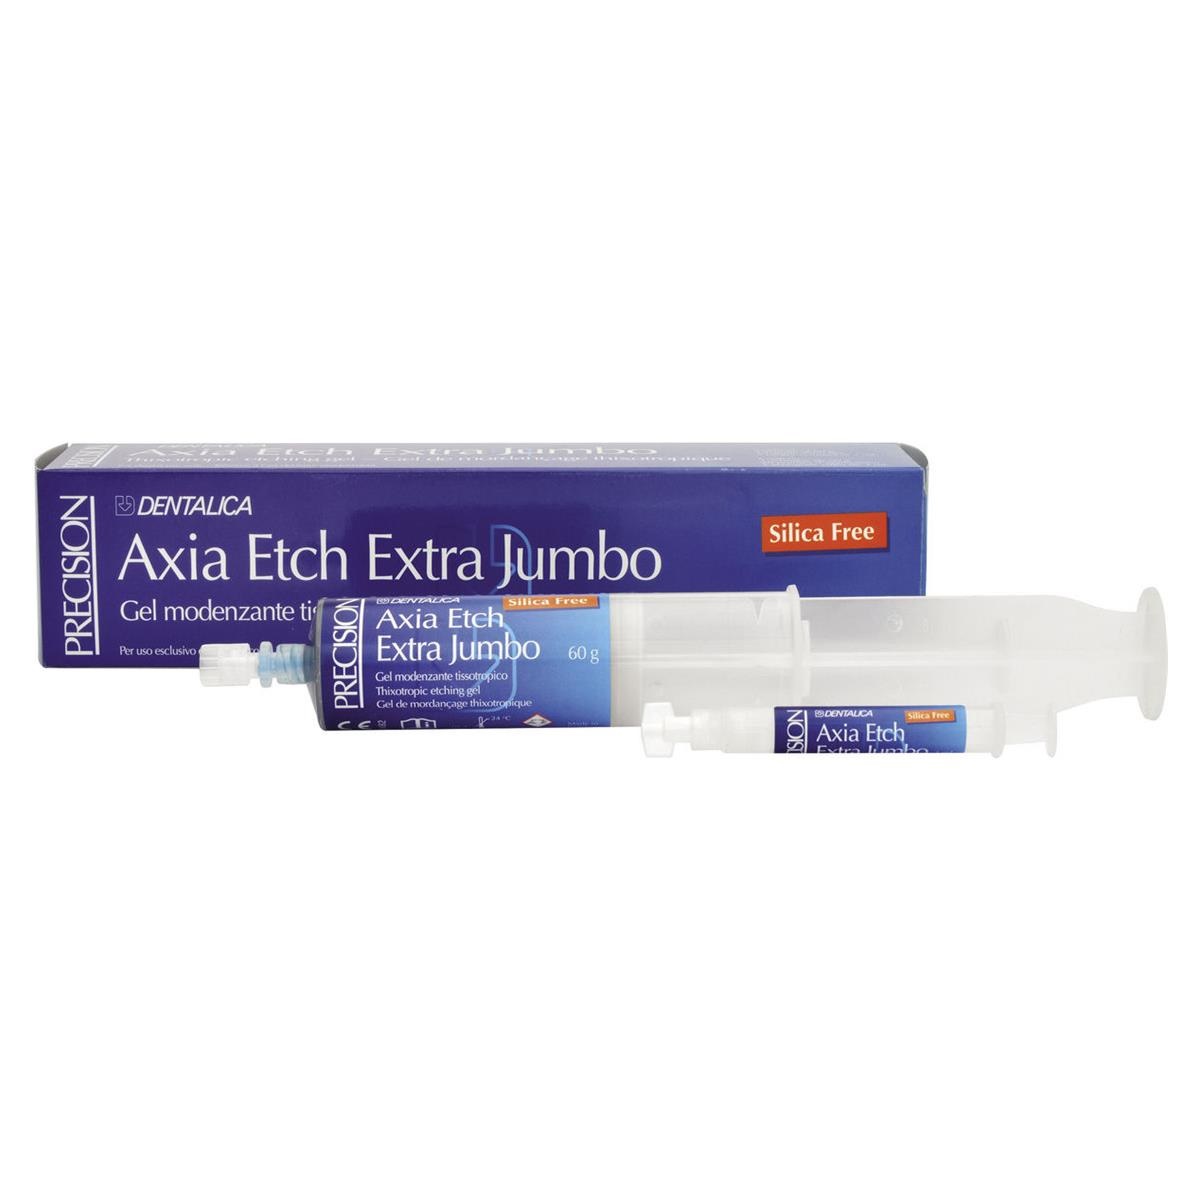 Axia Etch Extra Jumbo Kit 60g